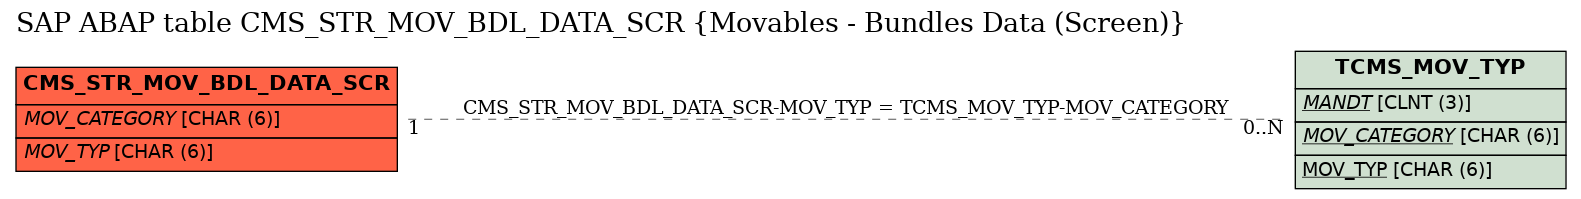 E-R Diagram for table CMS_STR_MOV_BDL_DATA_SCR (Movables - Bundles Data (Screen))